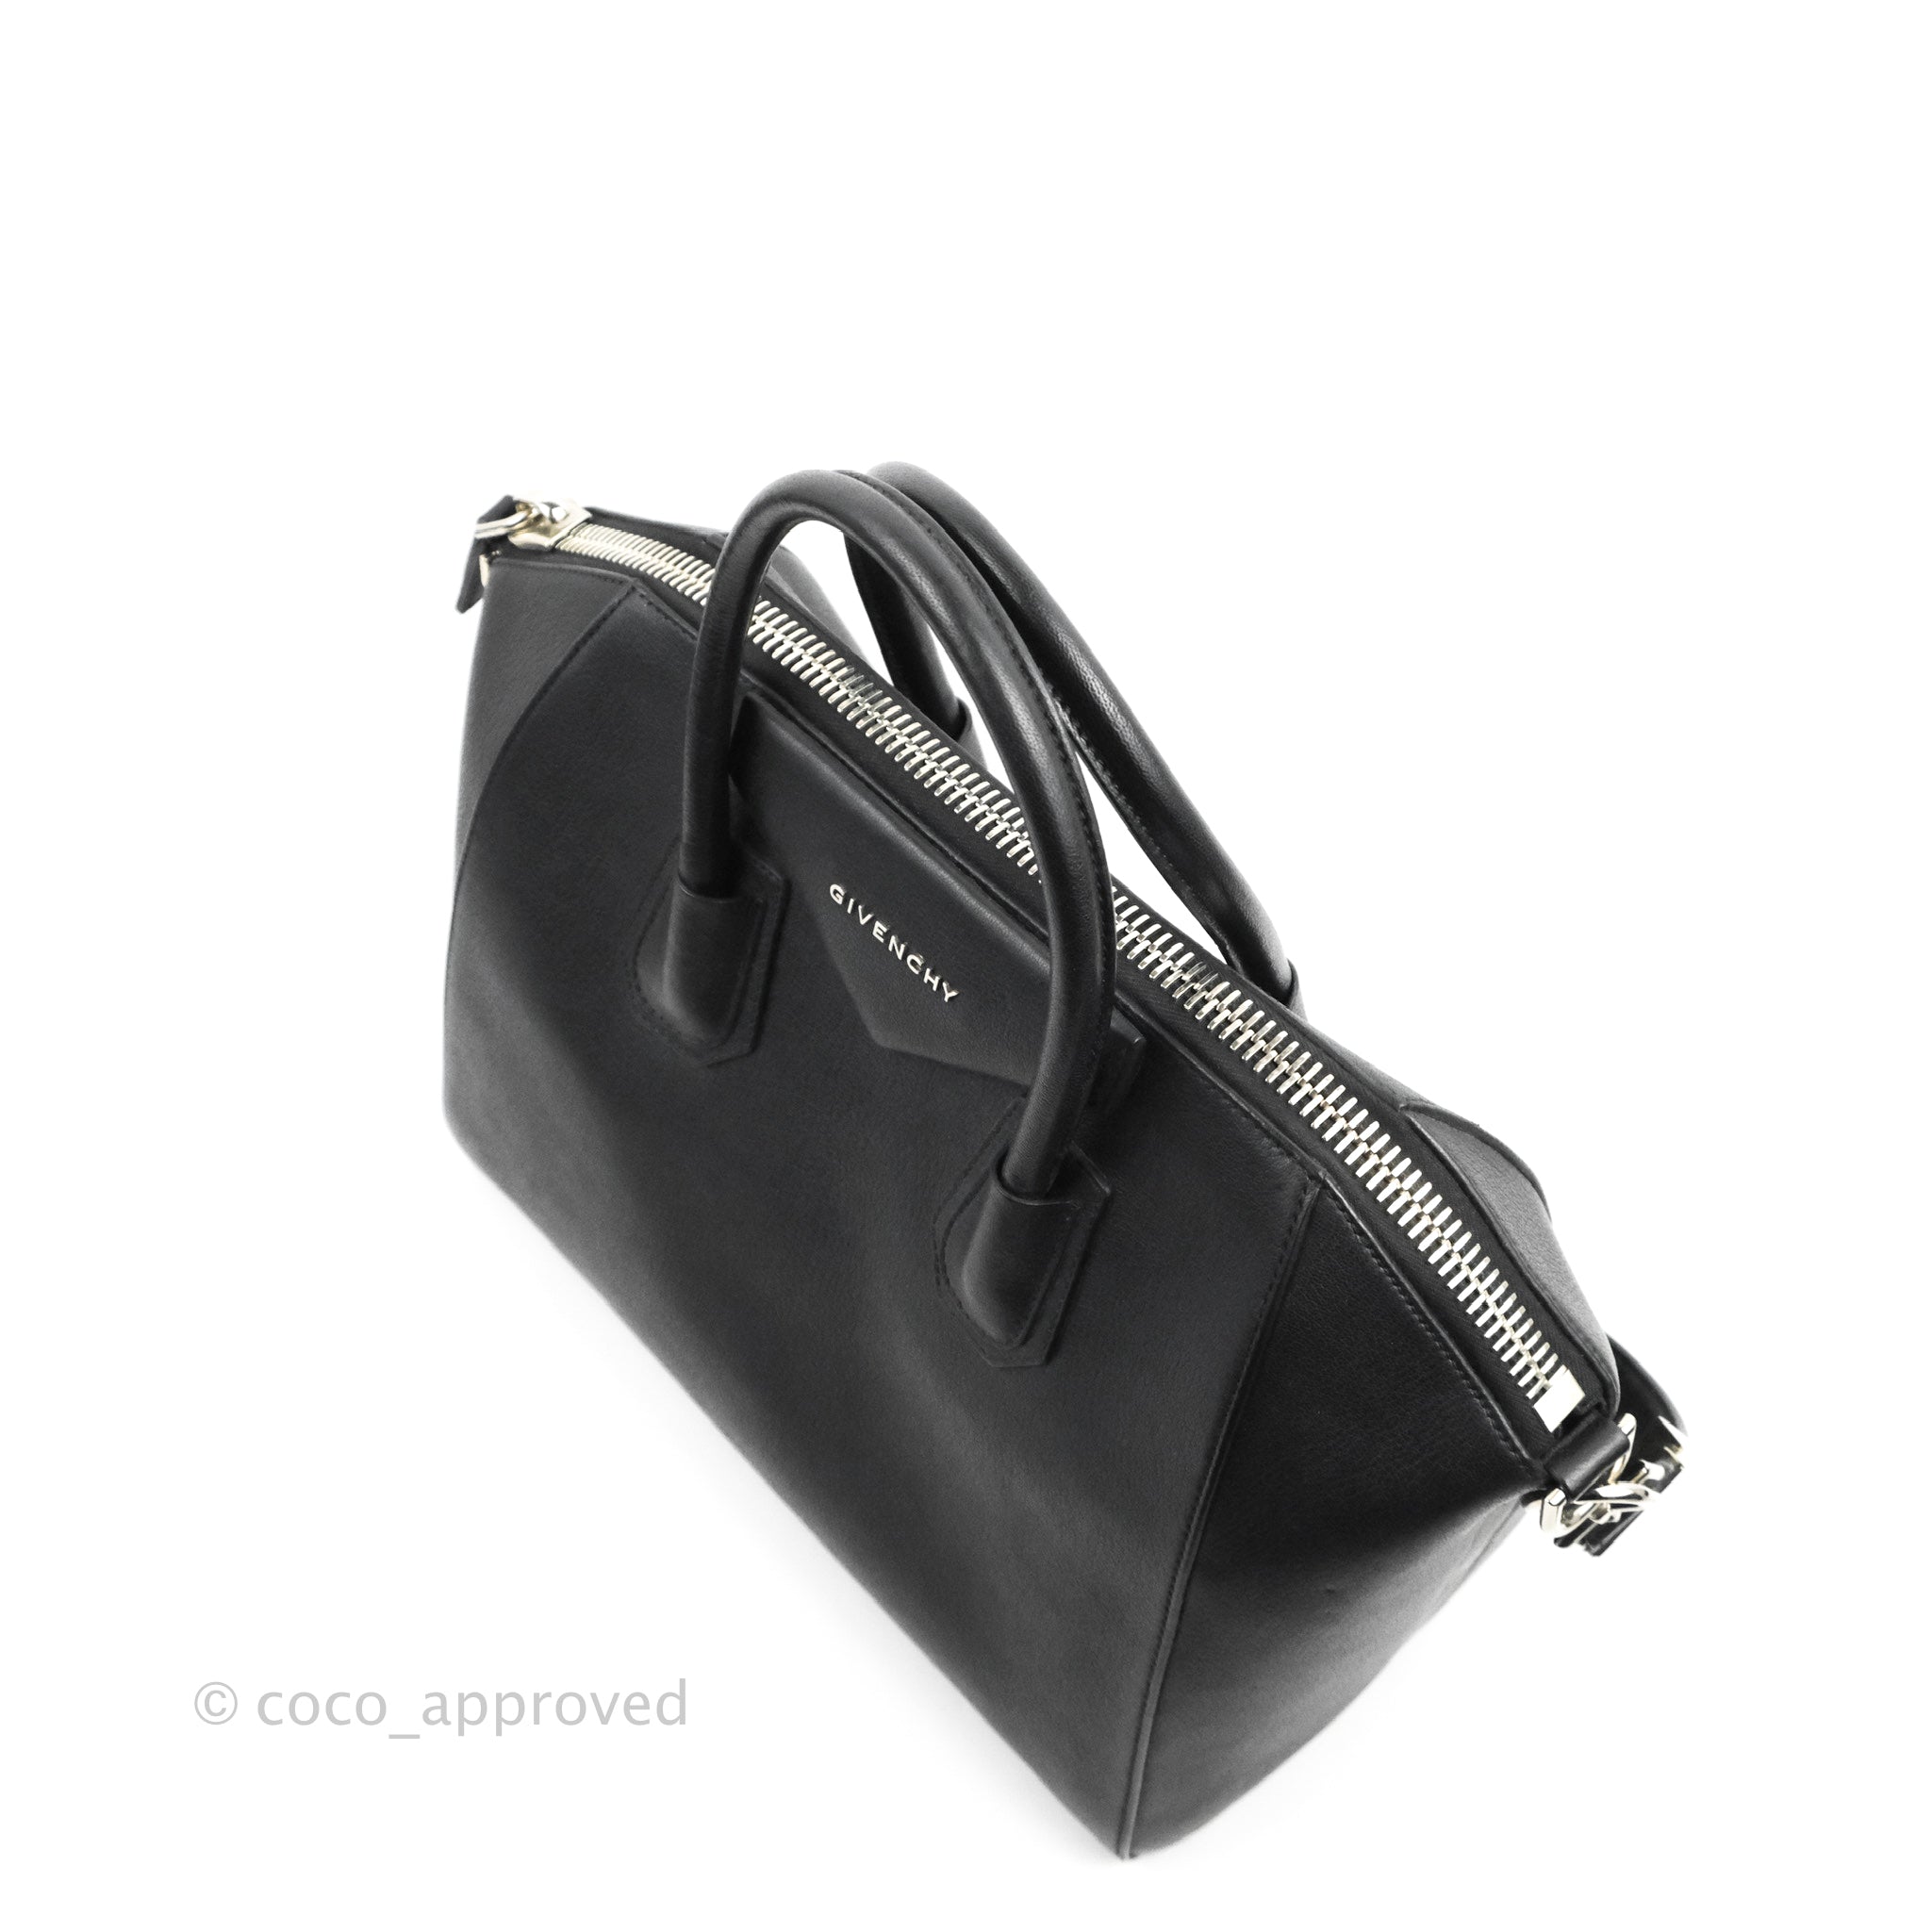 Antigona Medium Leather Tote in Black - Givenchy